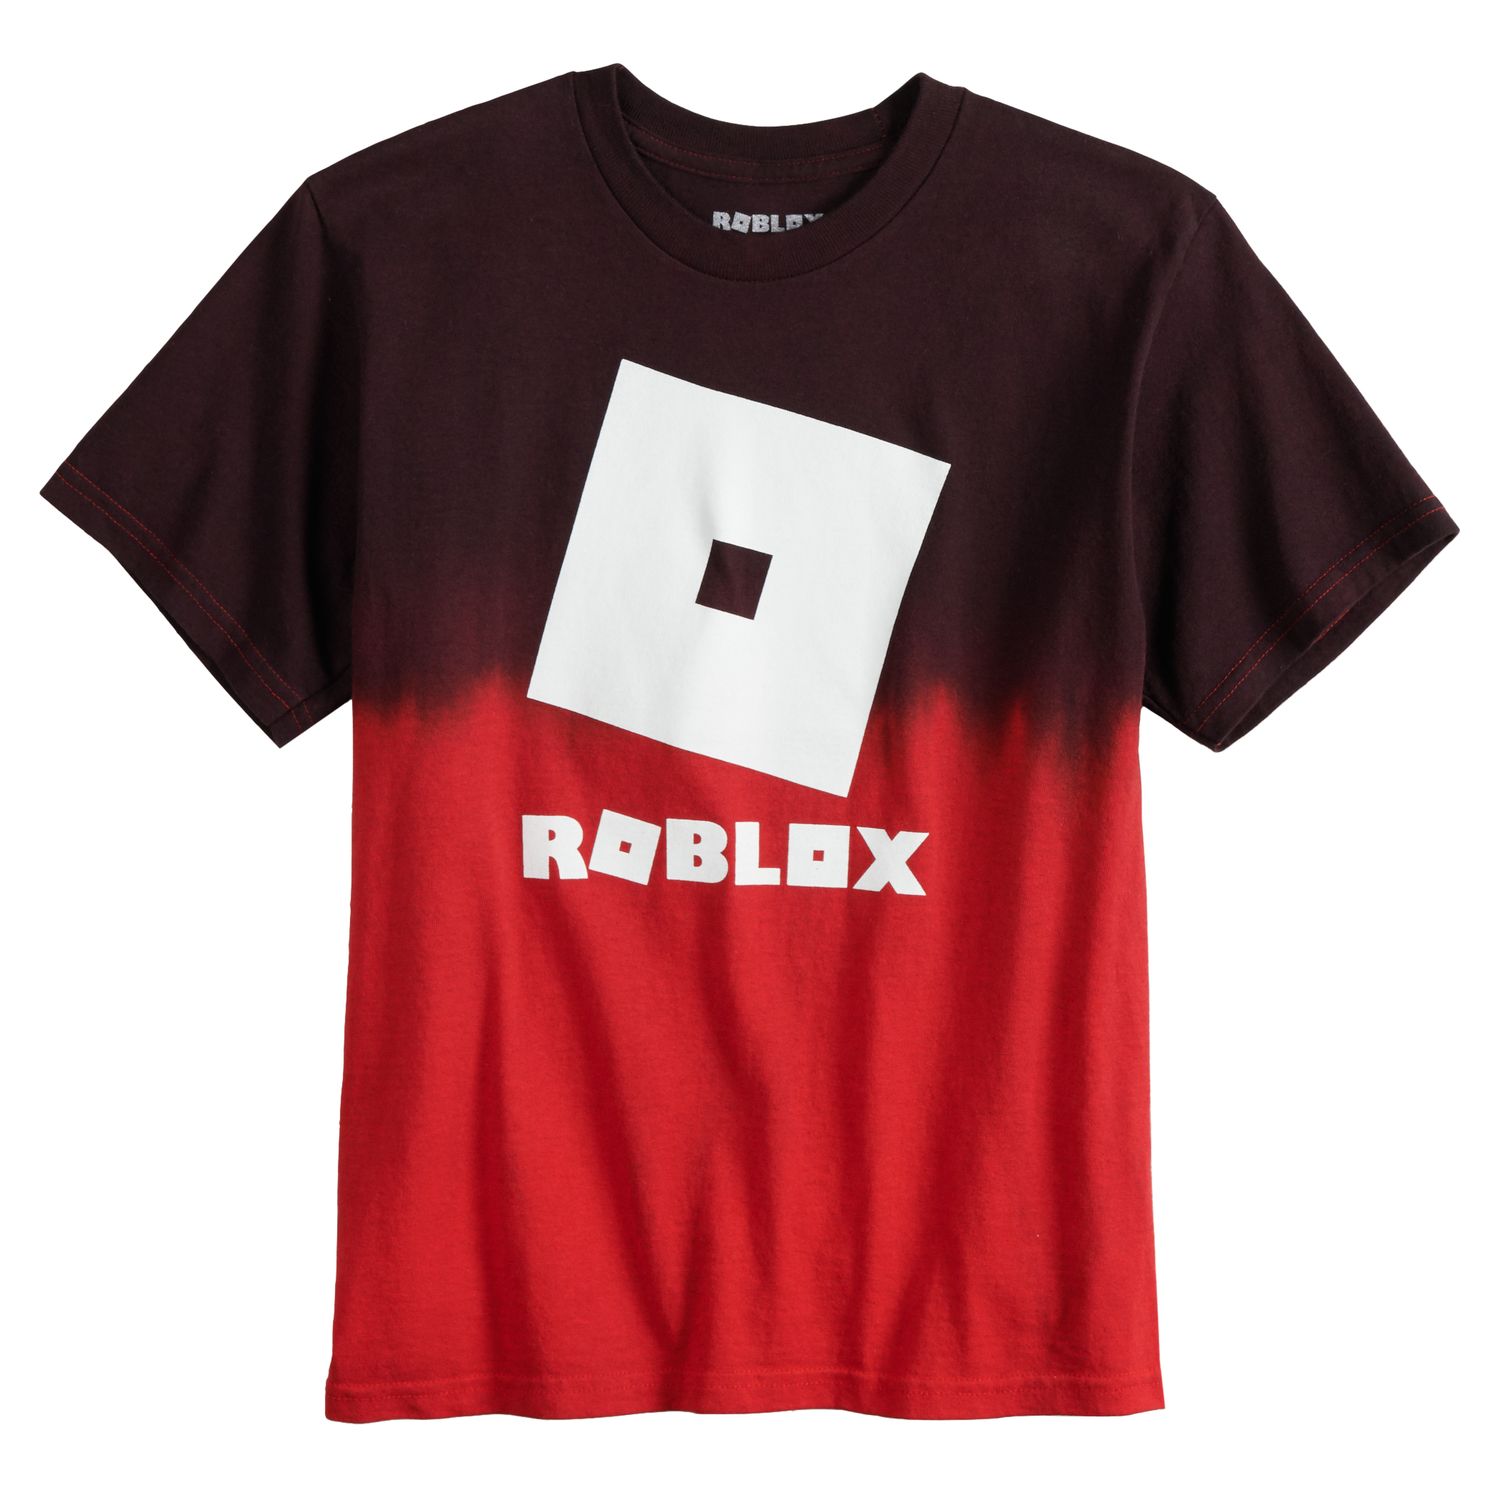 Roblox T Shirt For Boys - roblox t shirts boys